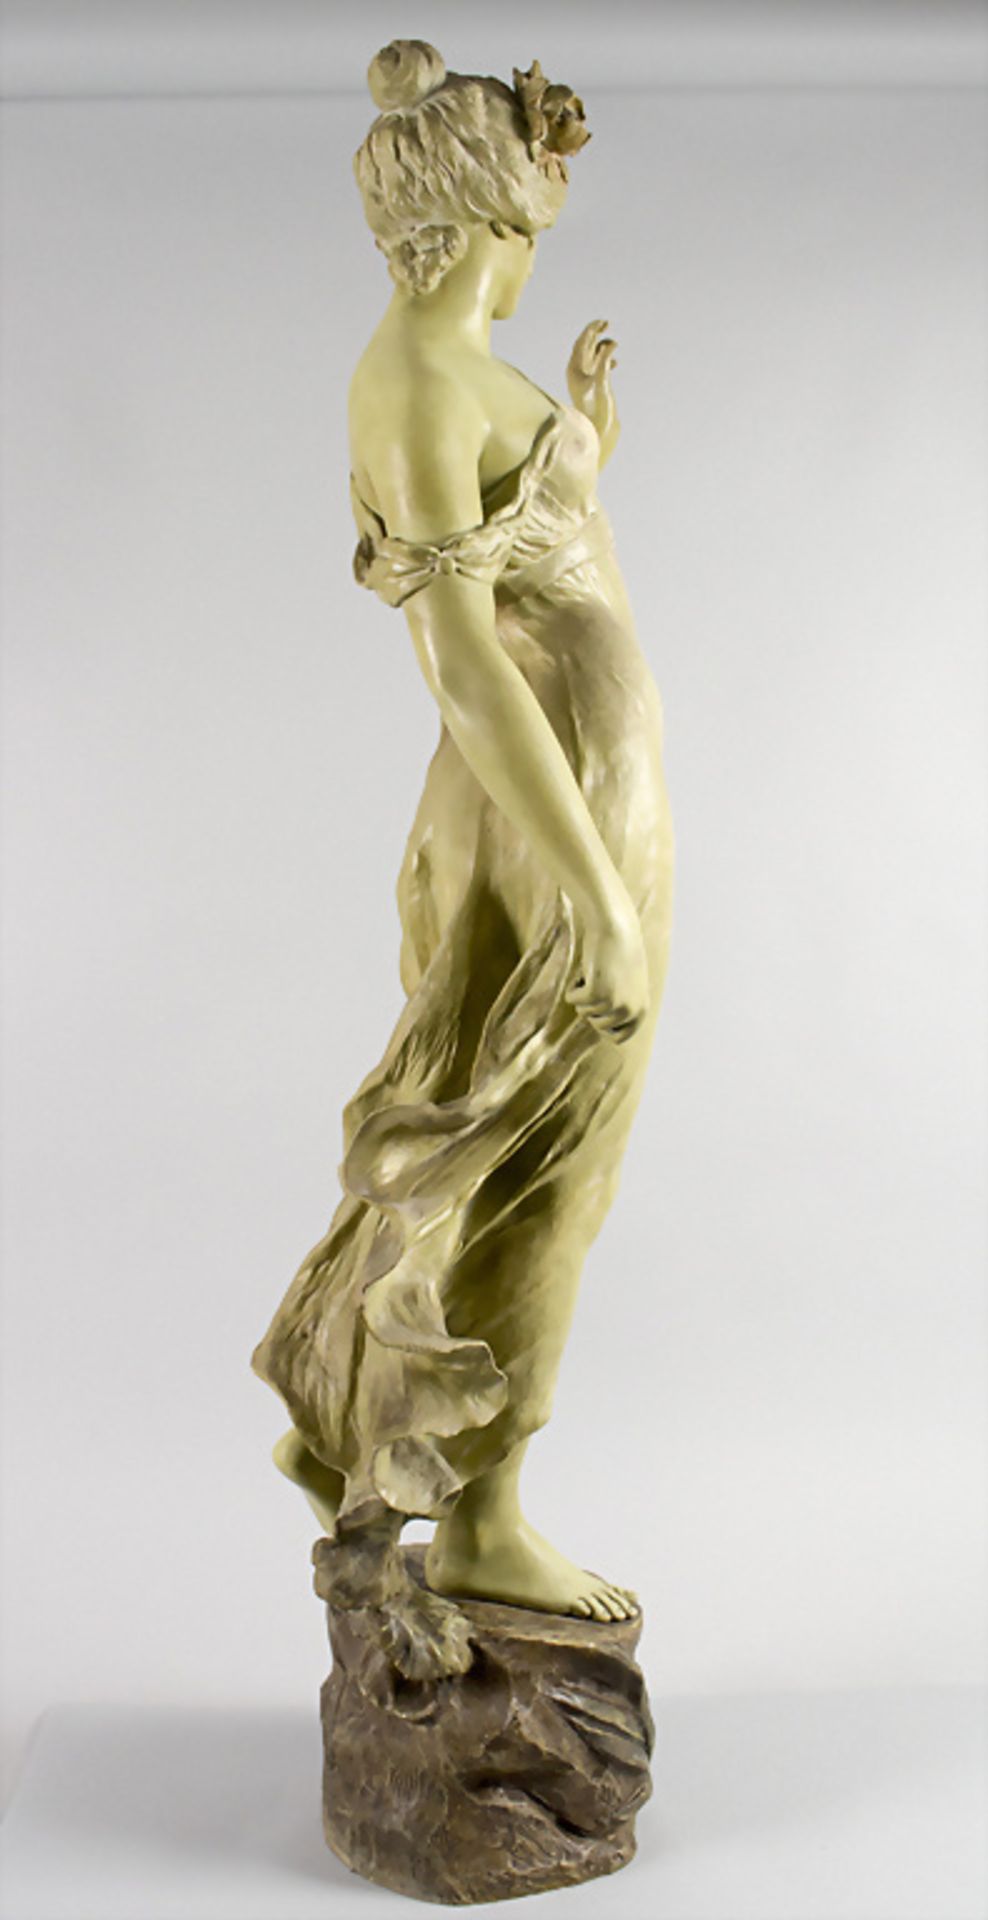 Jugendstil-Skulptur 'Tänzerin' / An Art Nouveau sculpture 'Dancer', Goldscheider, Wien, um 1900 - Image 5 of 9